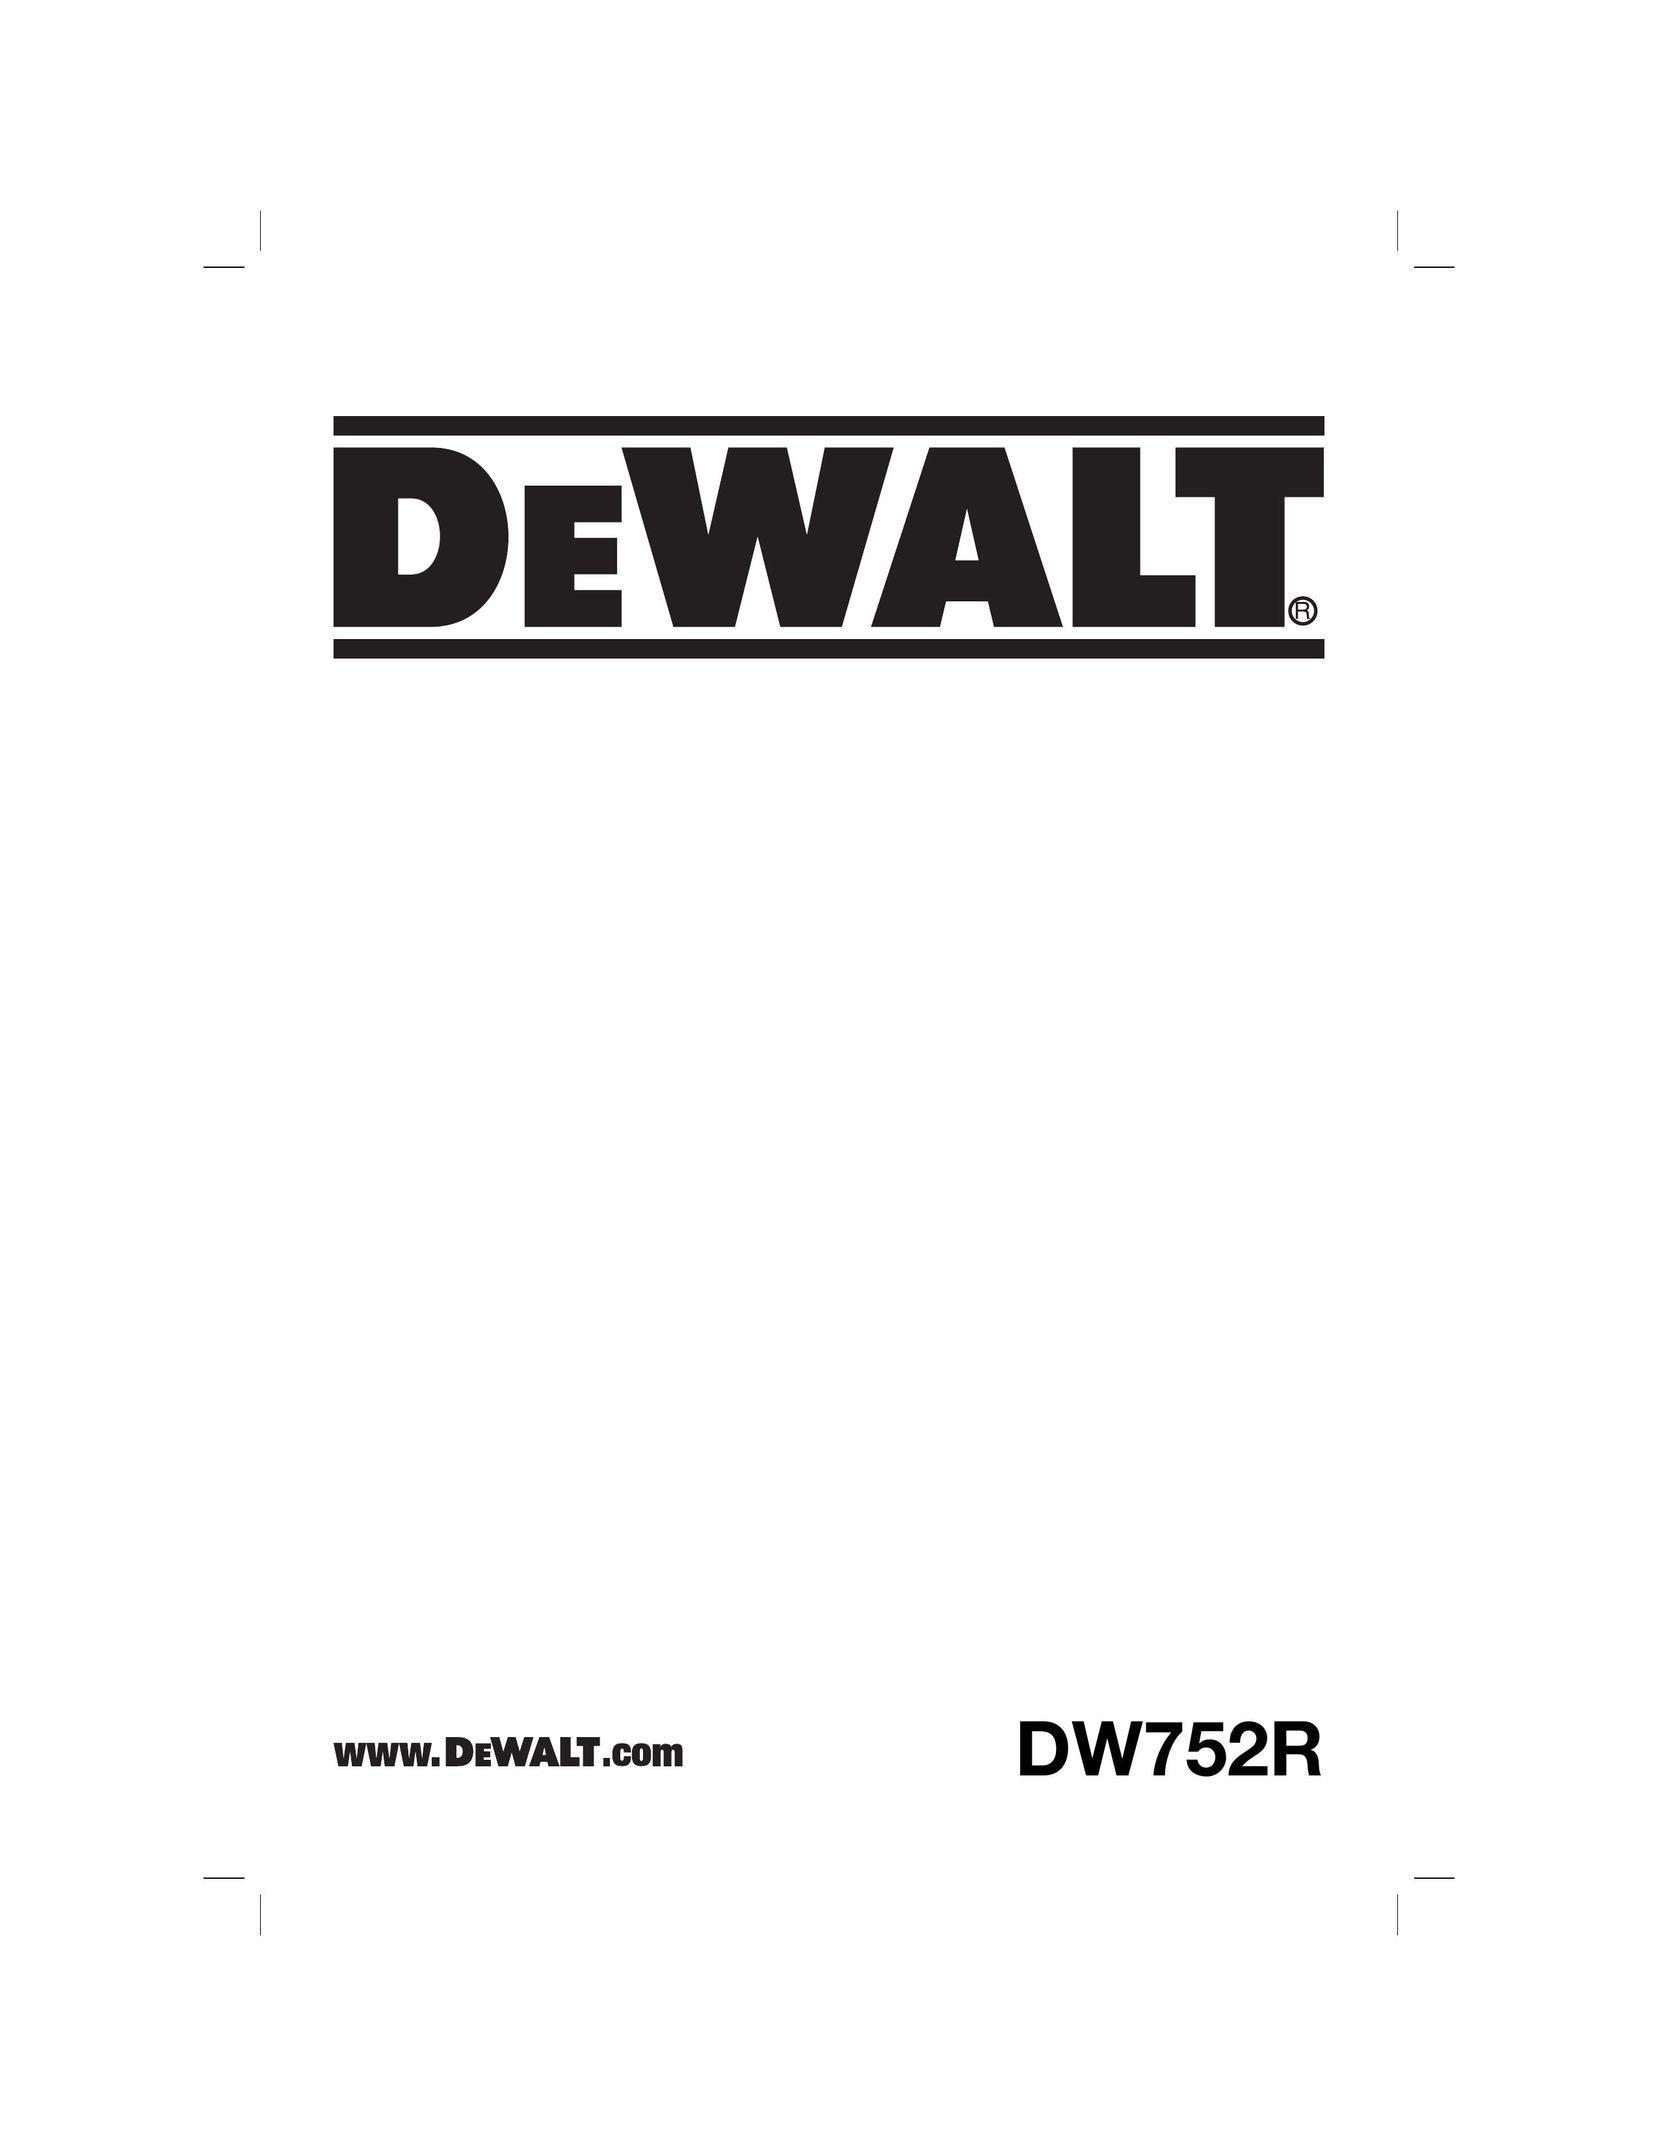 DeWalt DW752R Grinder User Manual